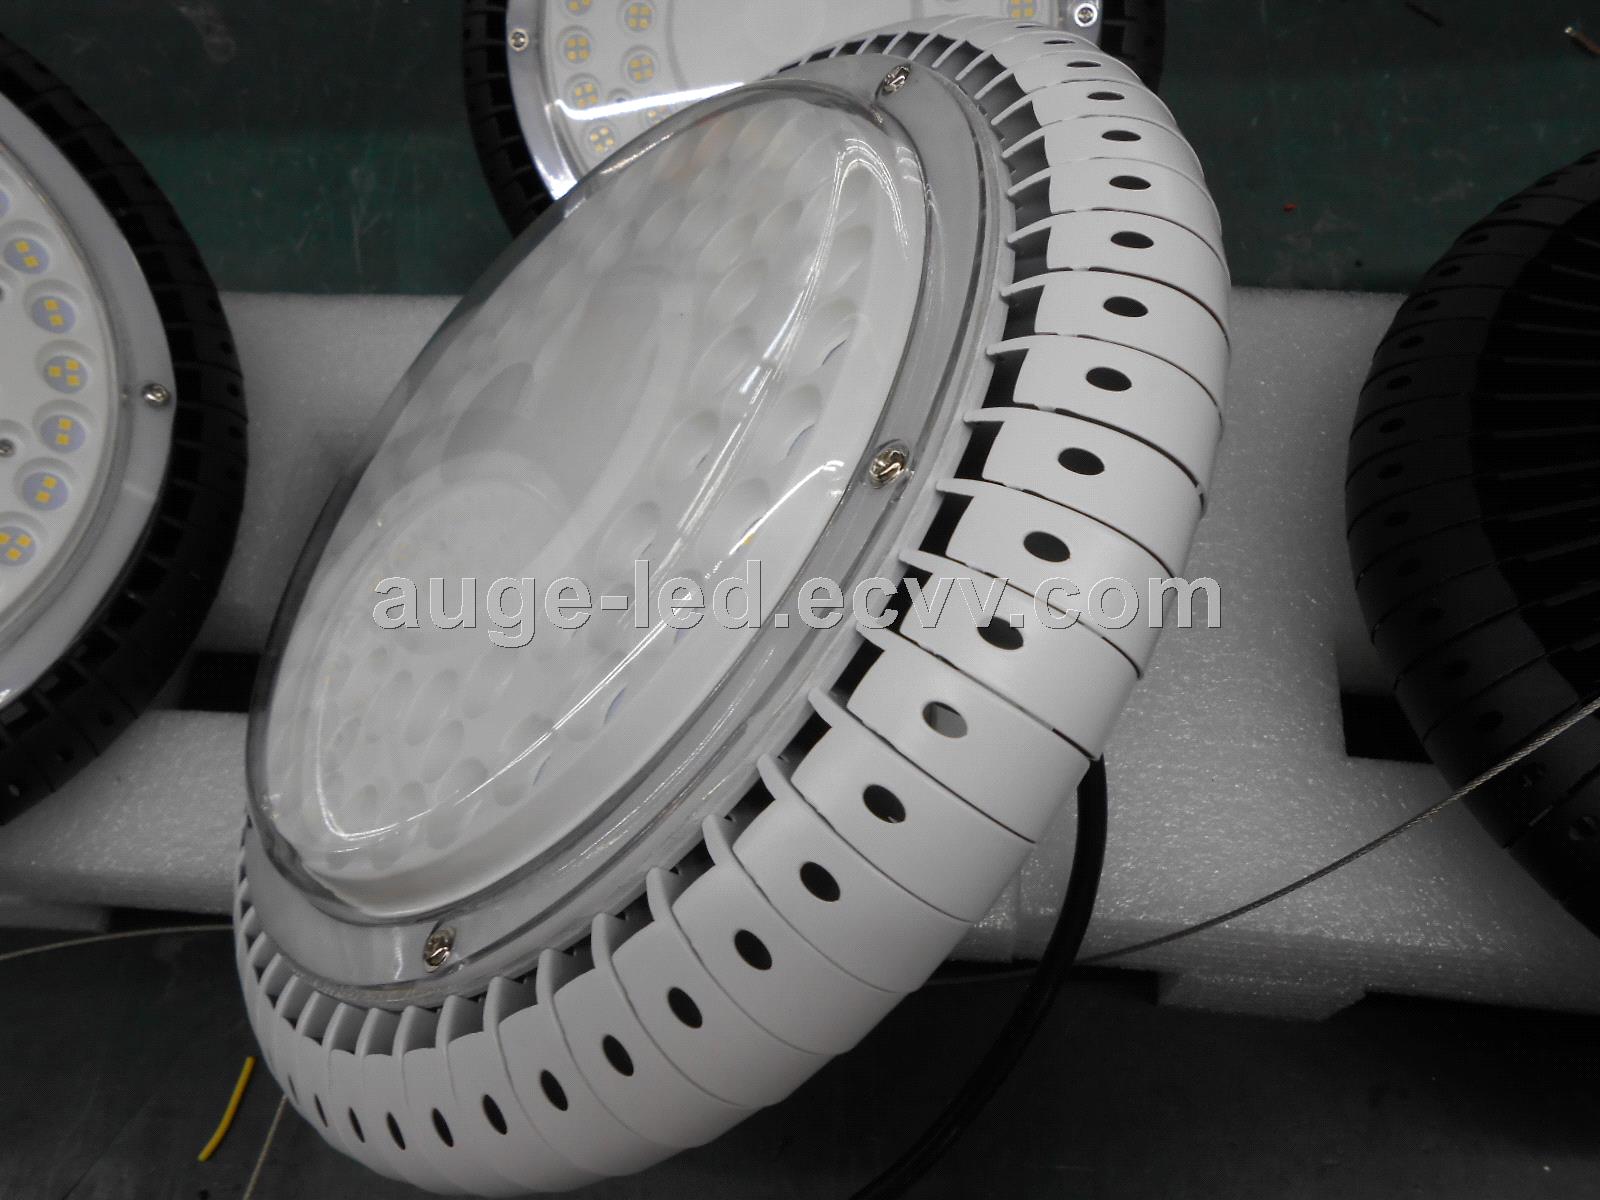 ACE40E39 UFO high bay light 100W 150W DOB high bay light IP65 for warehouse led industrial lighting 100W 150W DOB